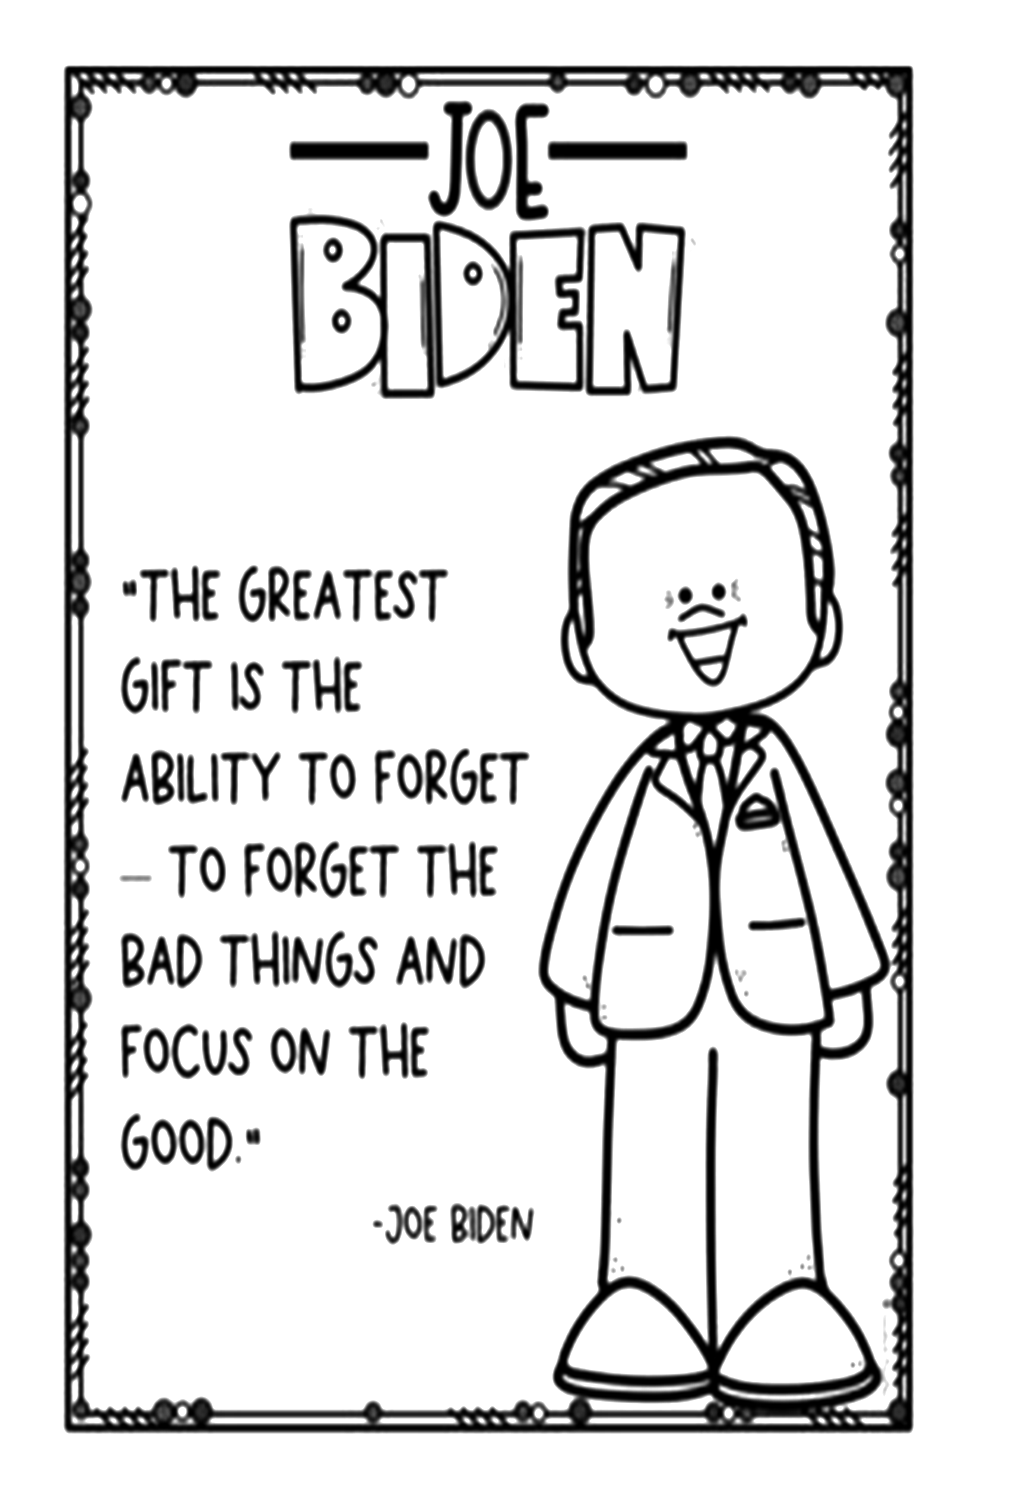 Joe Biden Advice Coloring Page